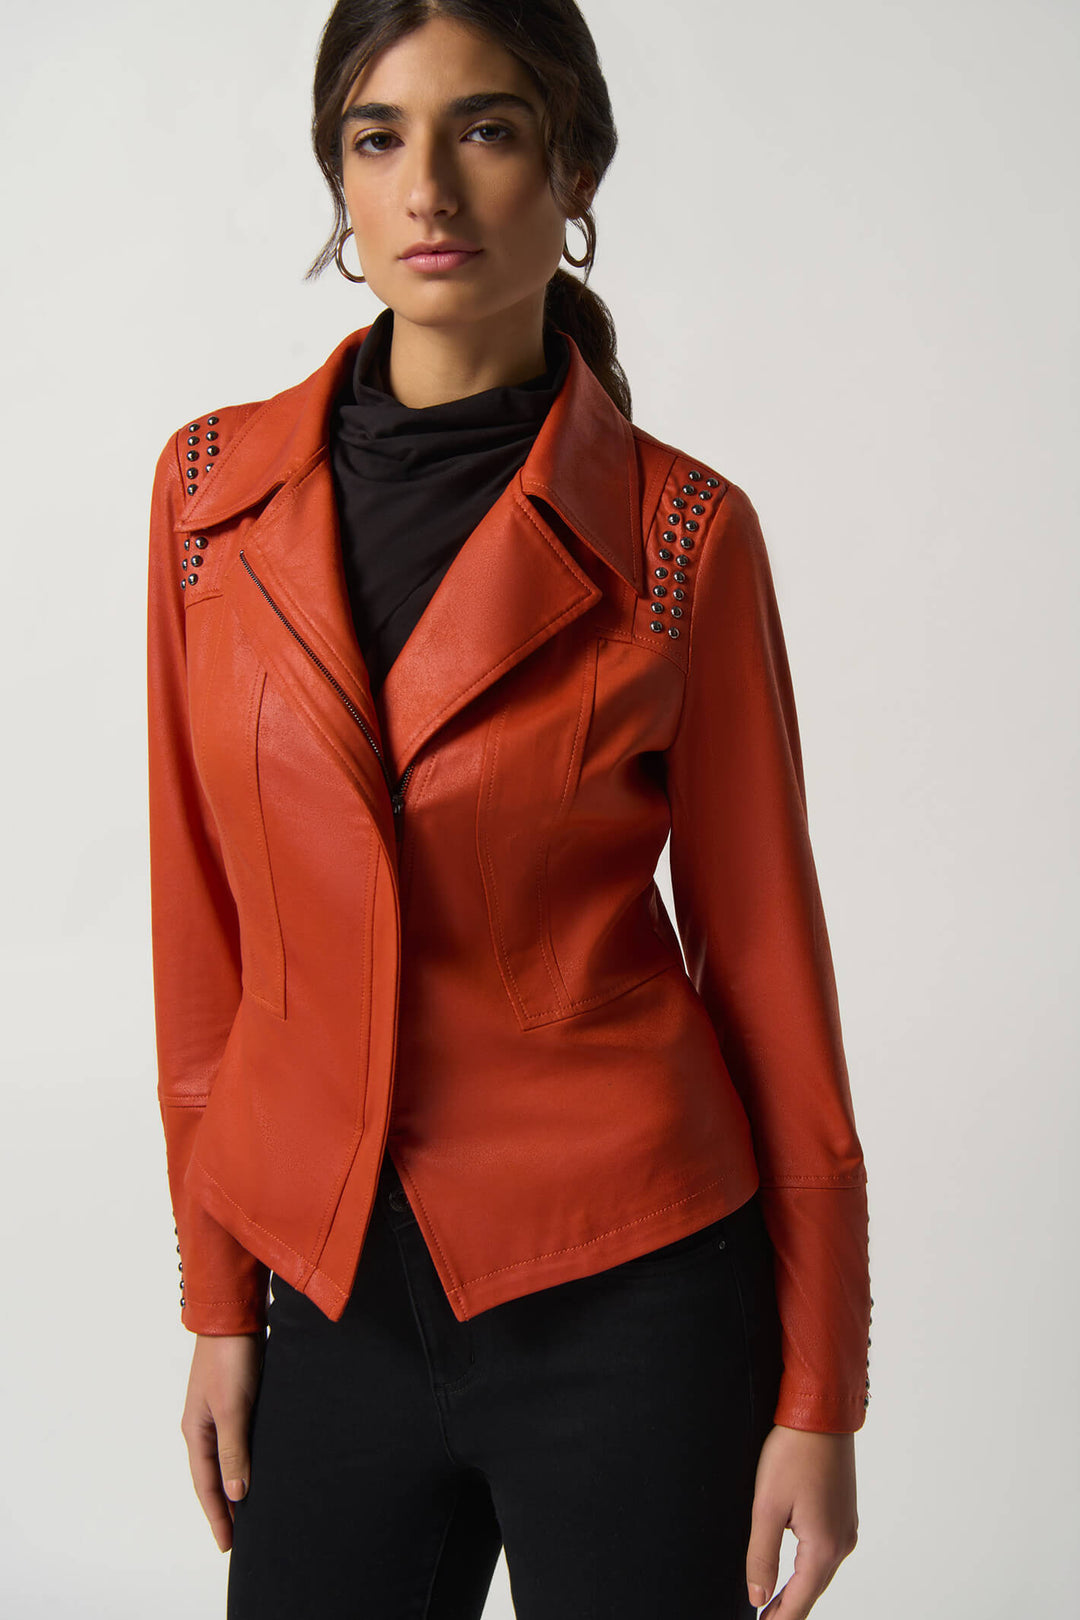 Joseph Ribkoff 233926 Tandoori Orange Faux Leather Studded Jacket - Experience Boutique